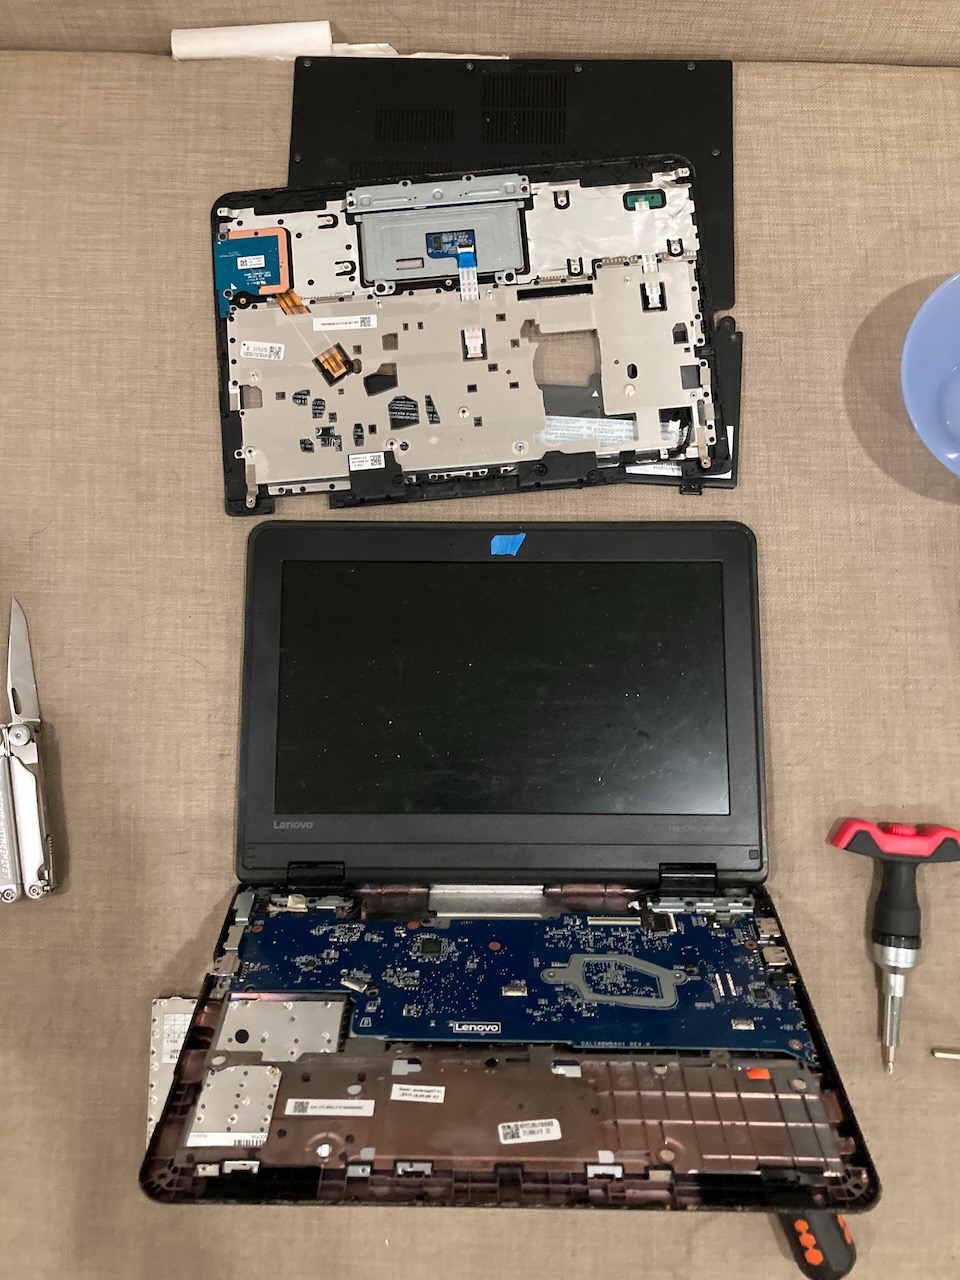 My ThinkPad laptop taken apart, with parts strewn